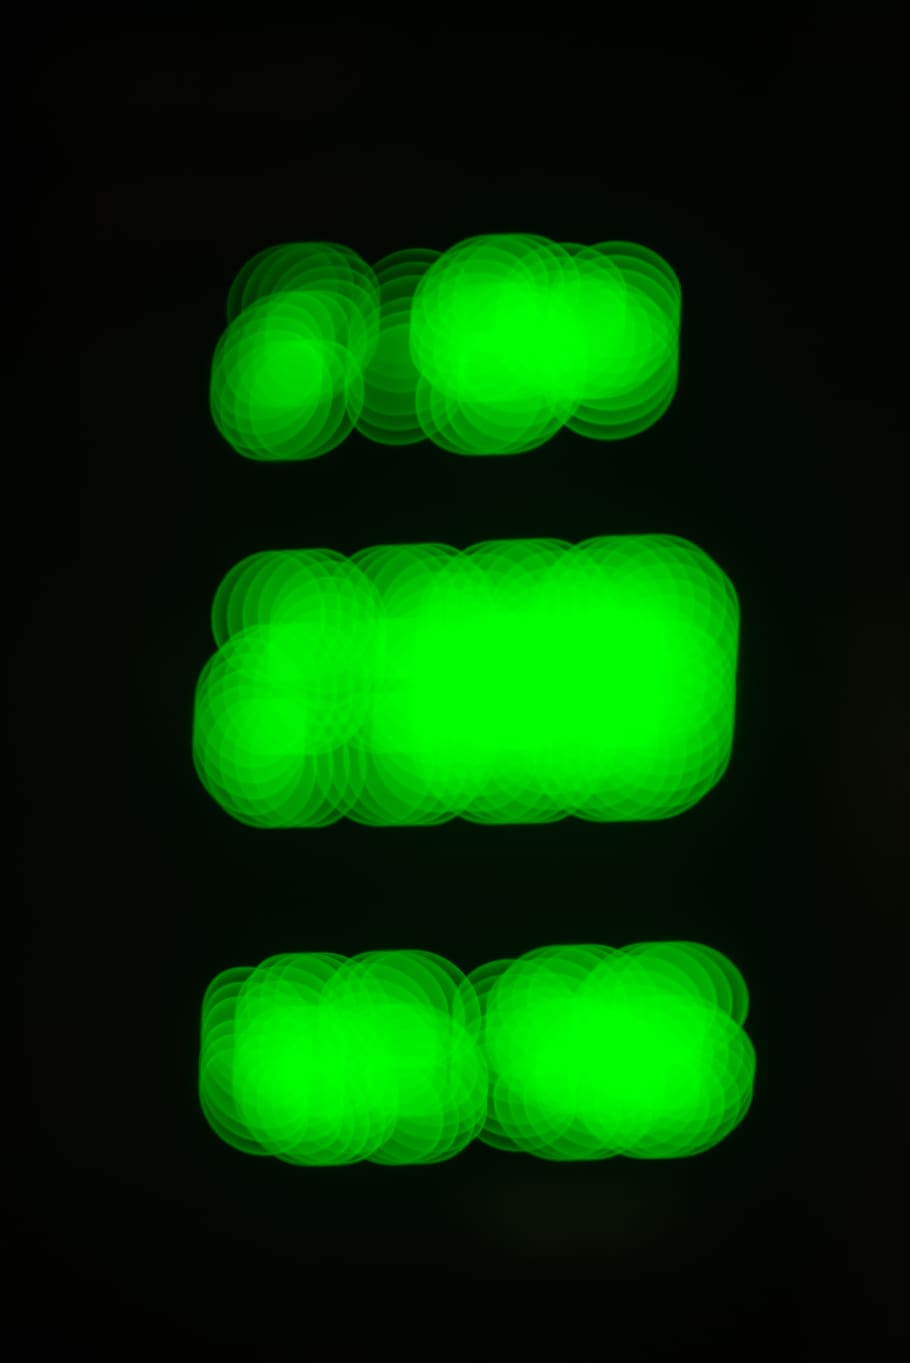 Hd Wallpaper Light Traffic Light Green Highlights Oof Out Of Focus Wallpaper Flare